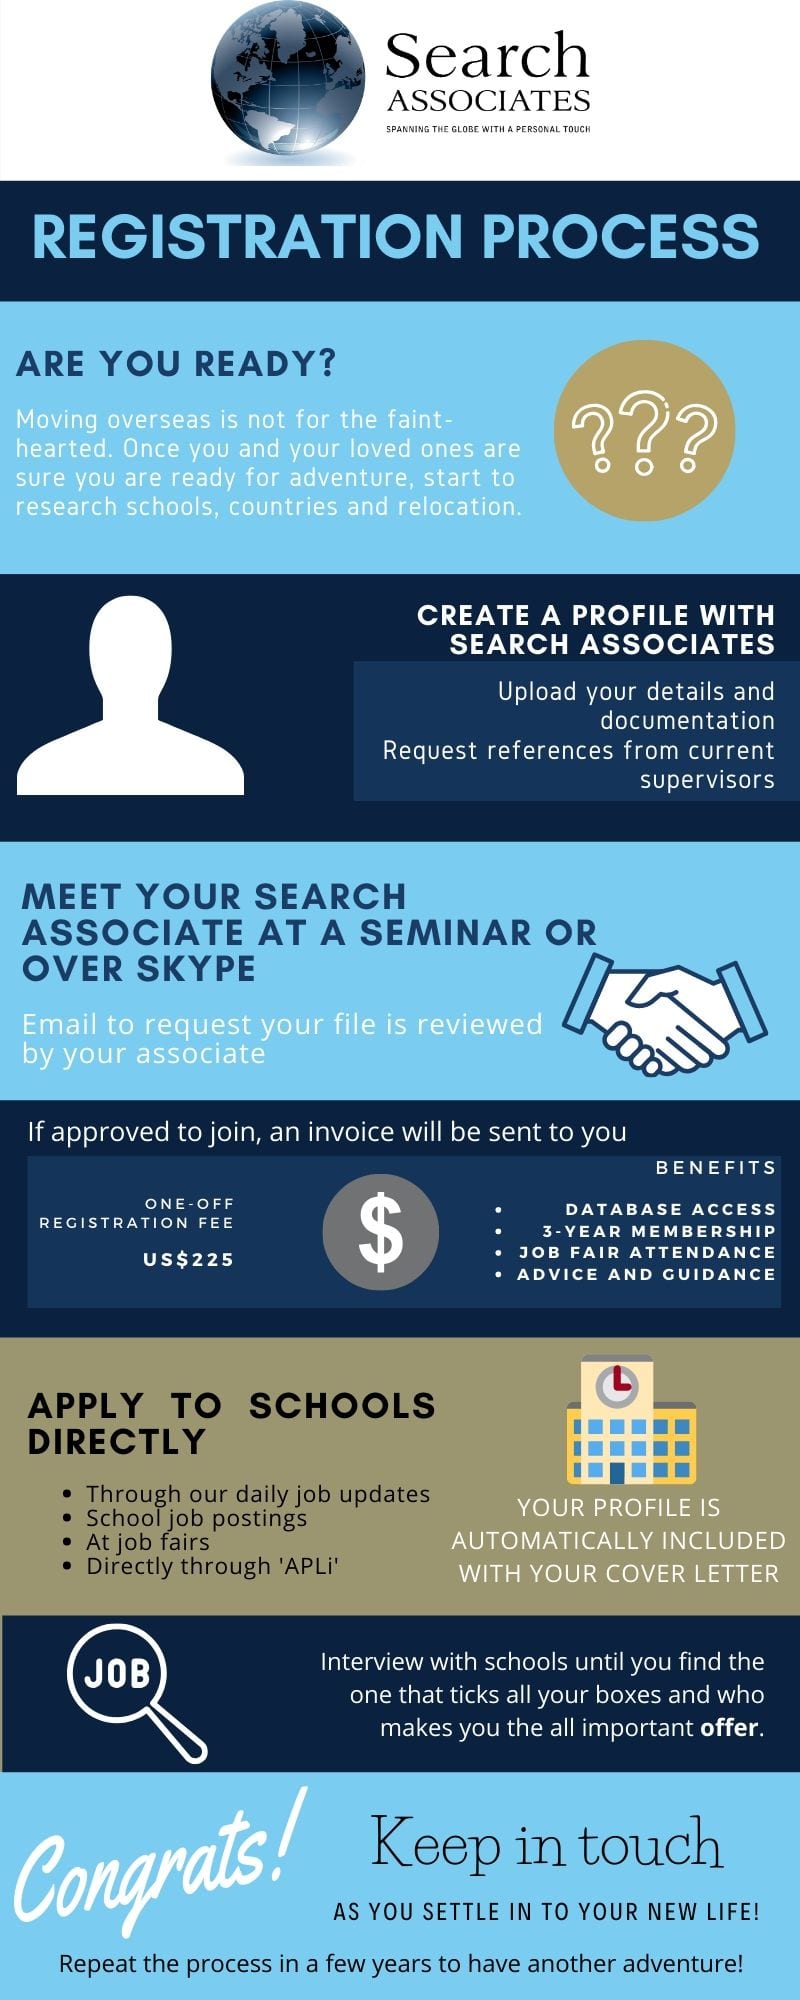 Search Associates Search Associates ANZ Search Associates registration guide